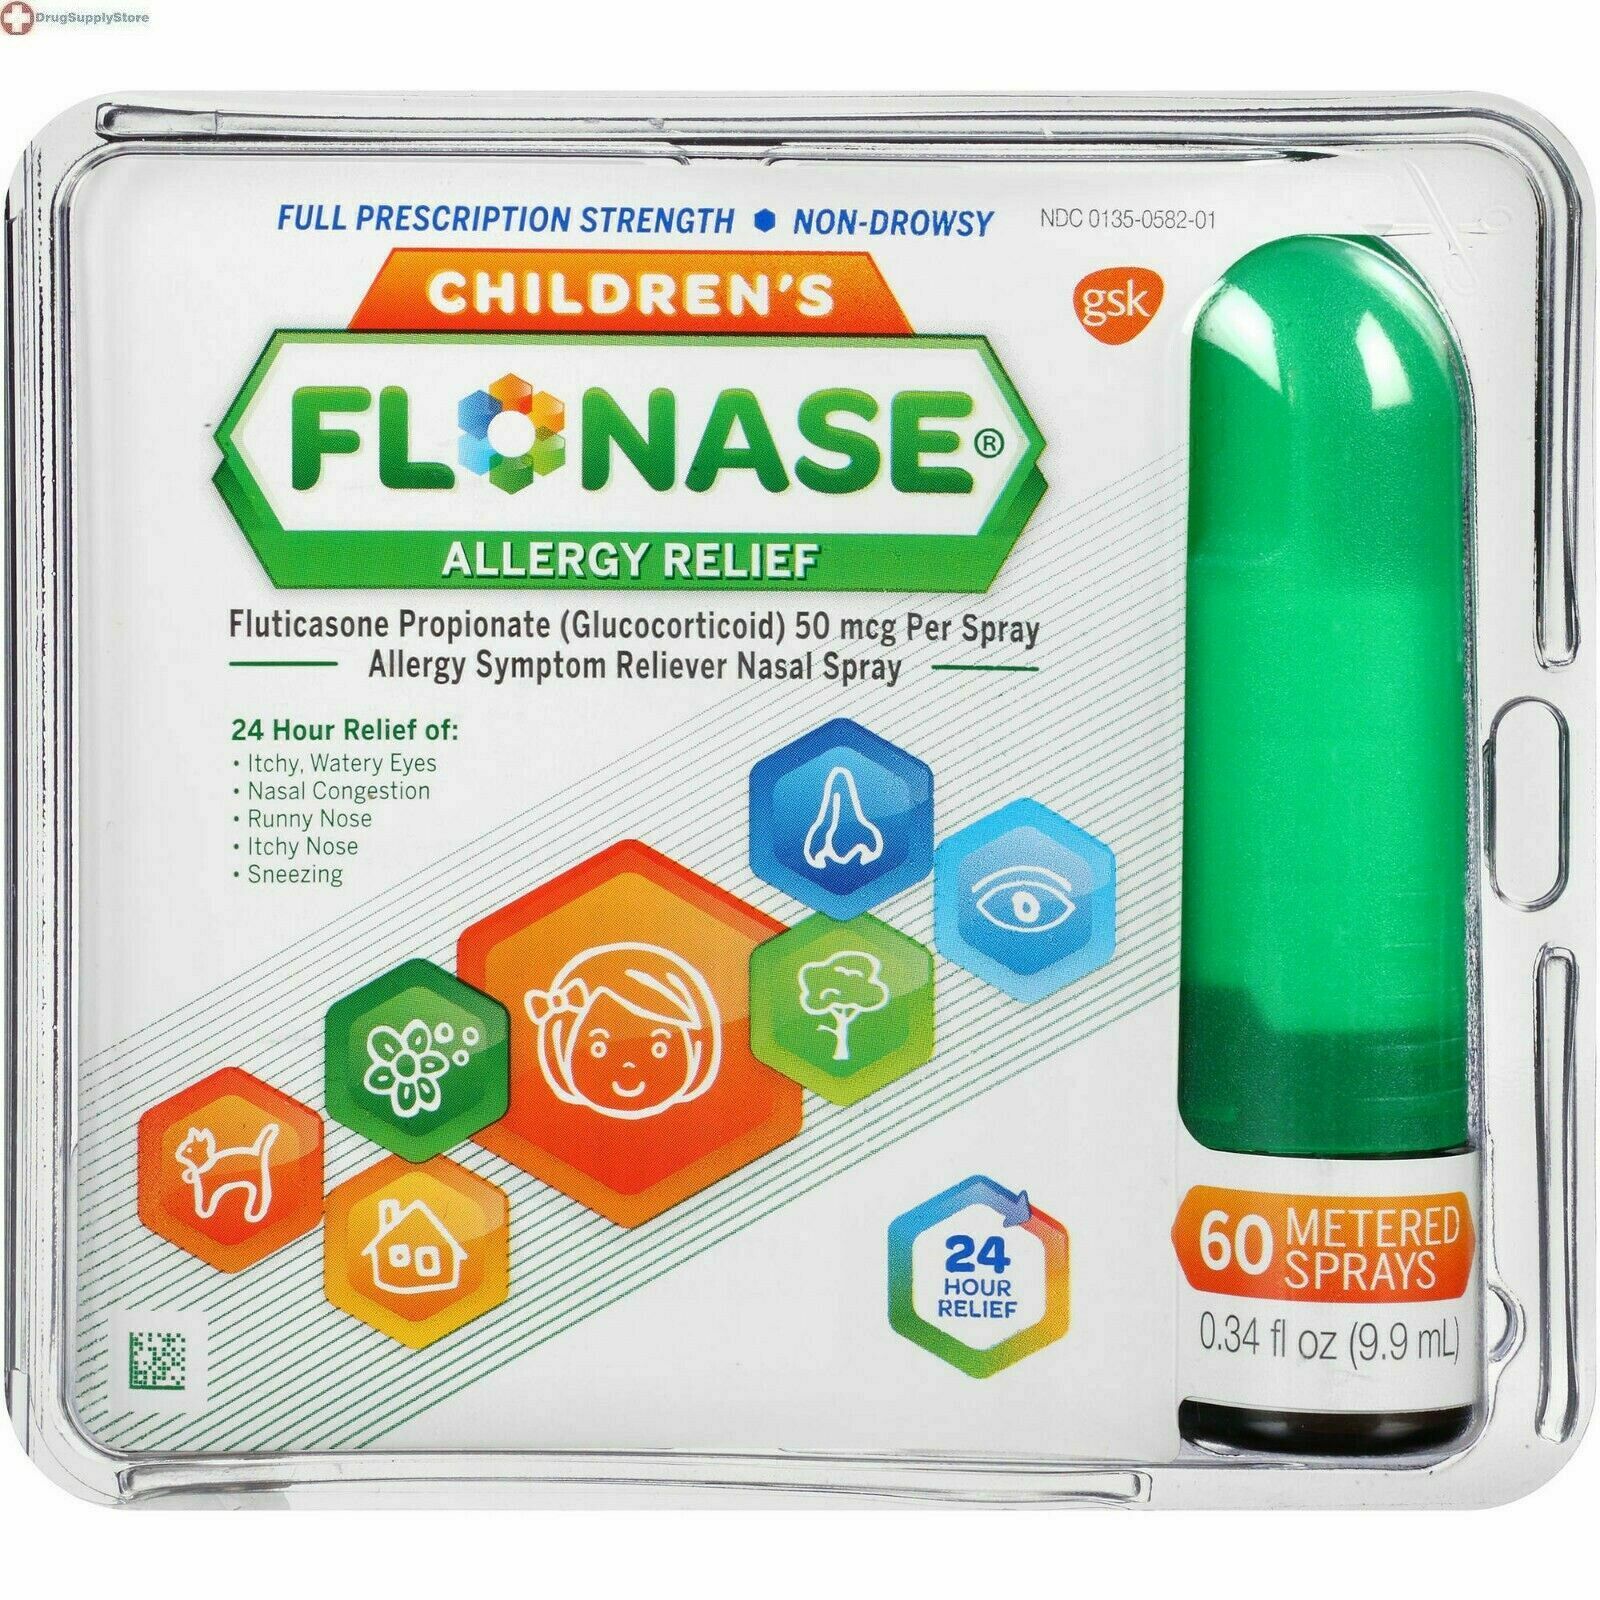 flonase-hypersensitive-response-relief-nasal-spray-60-120-144-metered